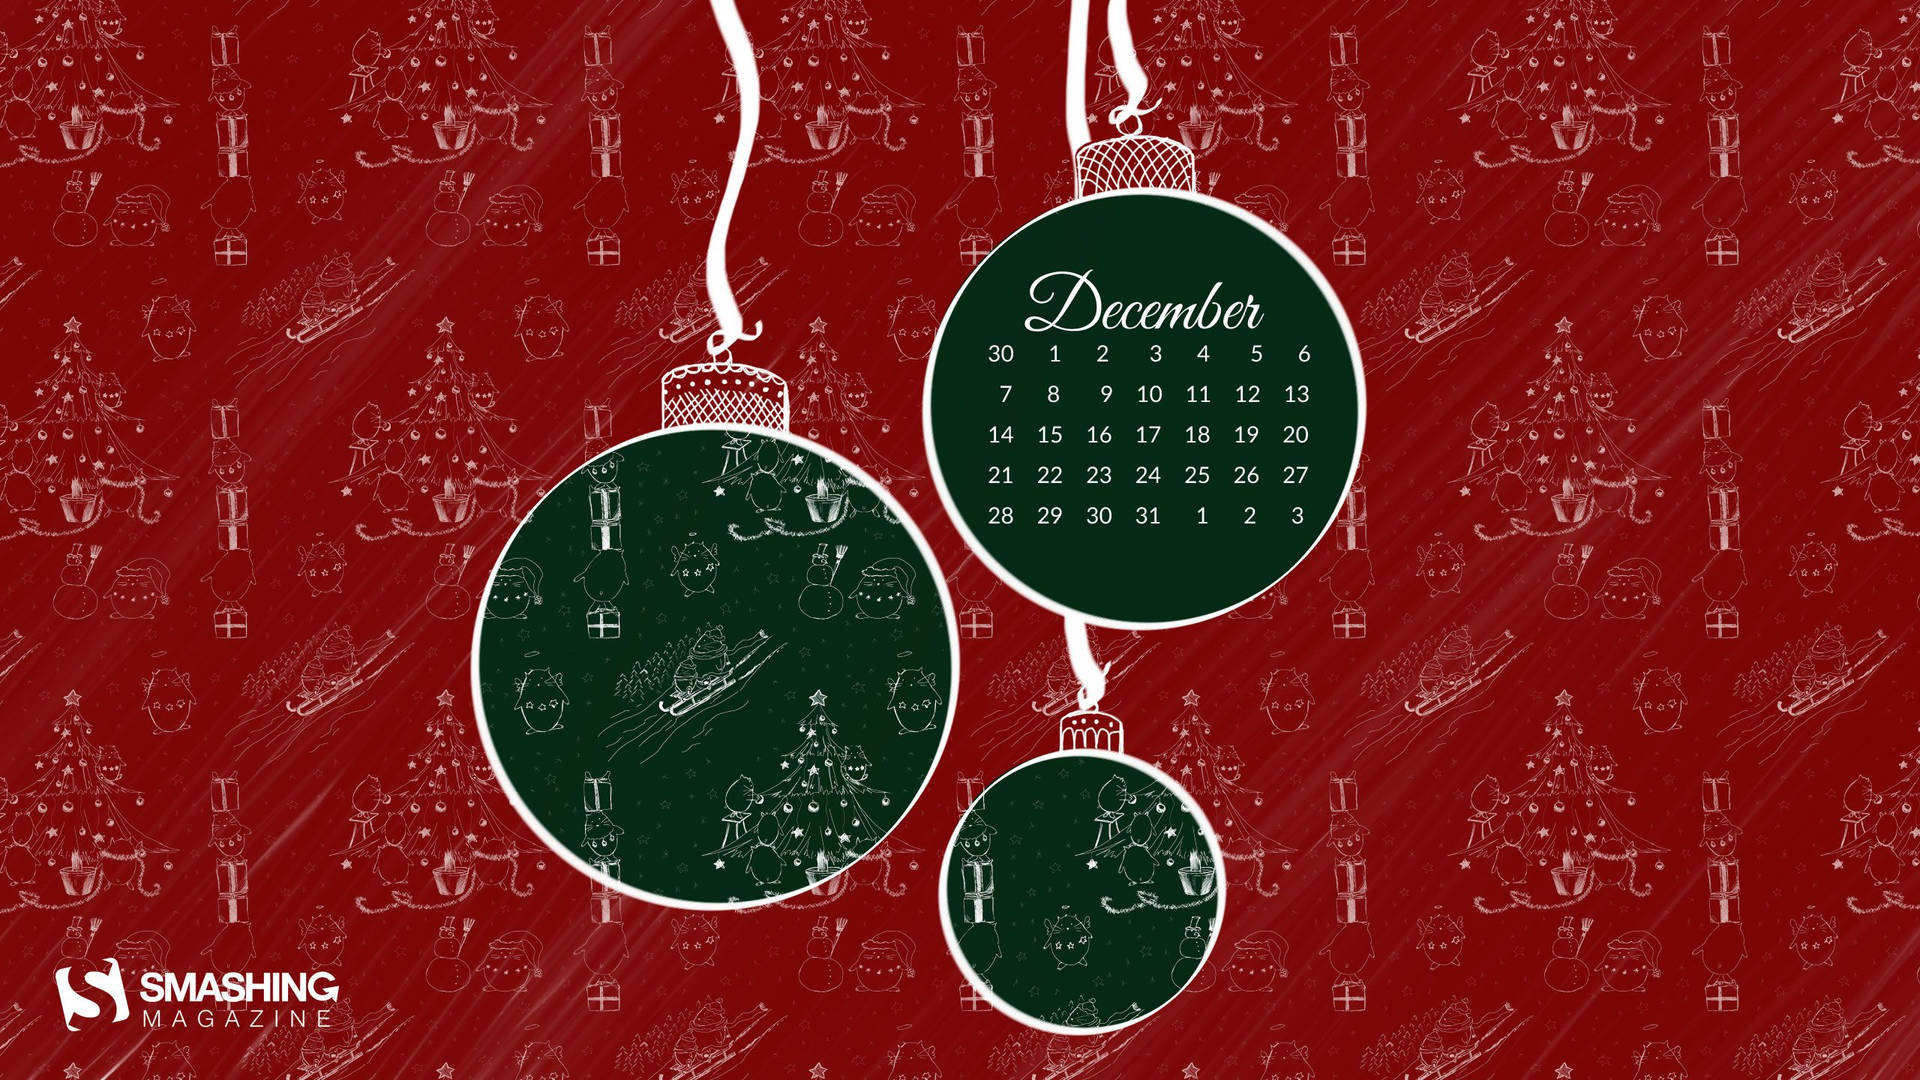 December Christmas Calendar